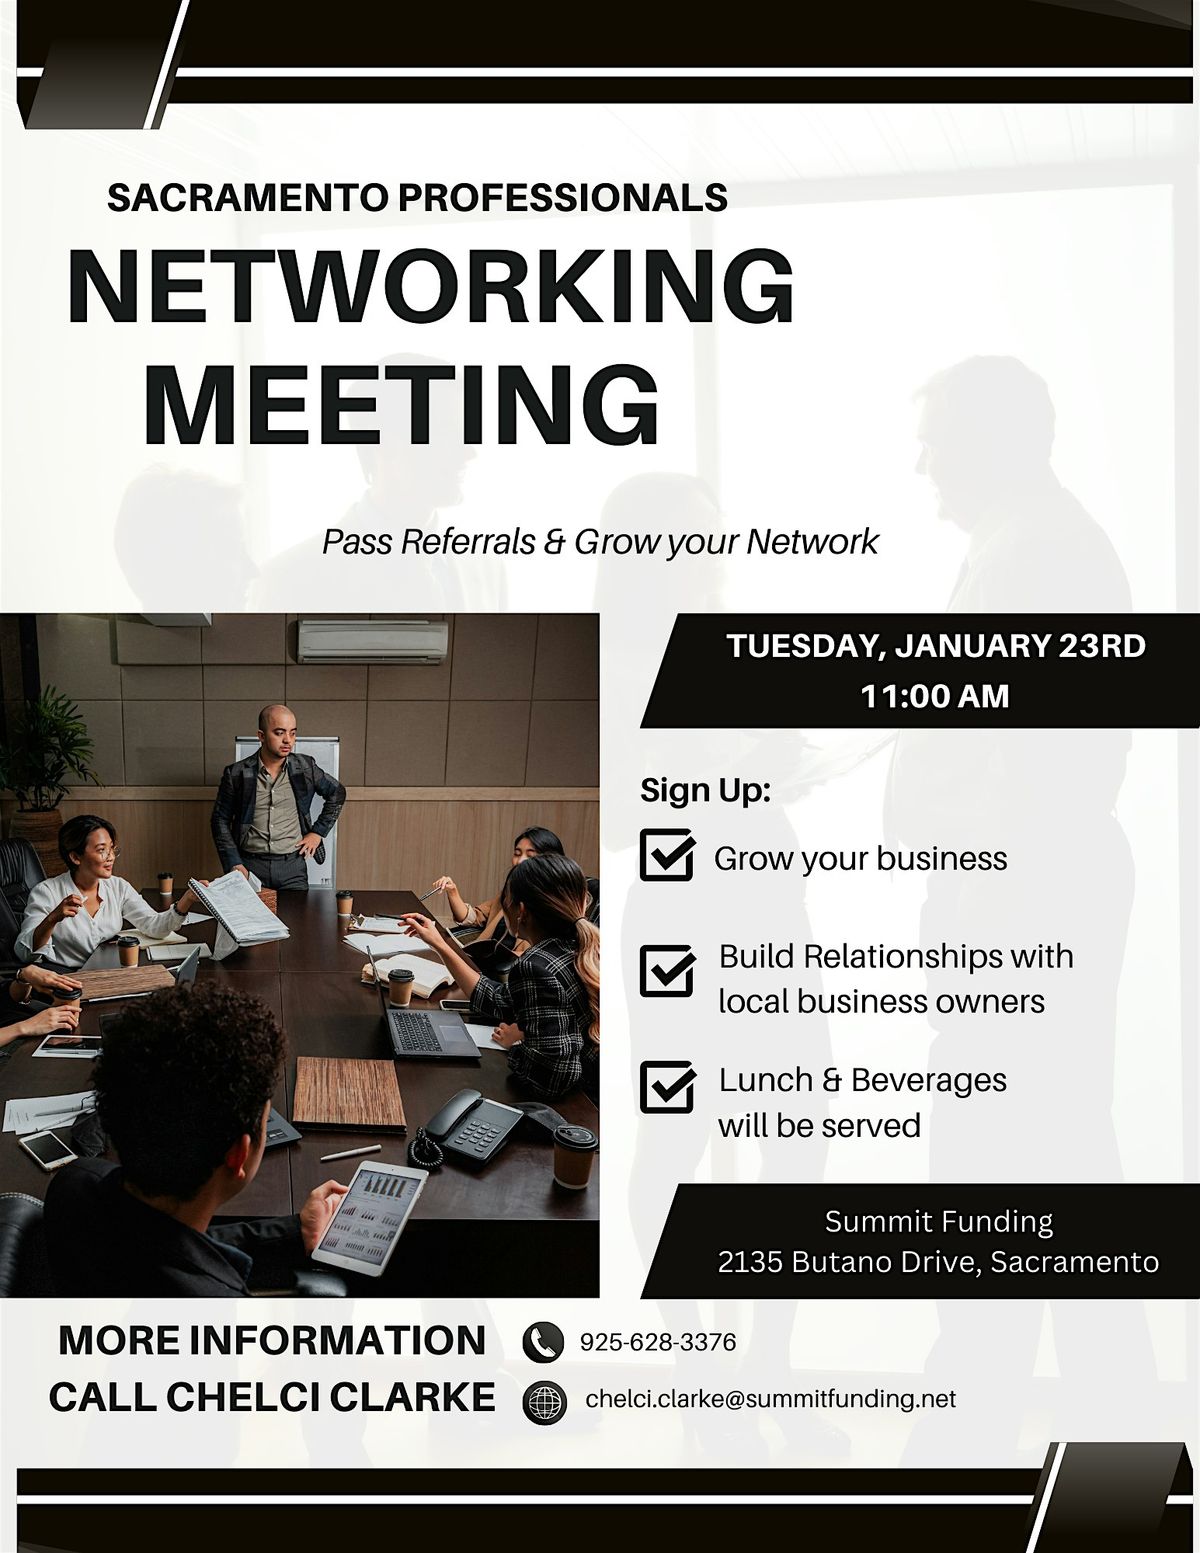 Copy of Sacramento Professionals Networking Meeting